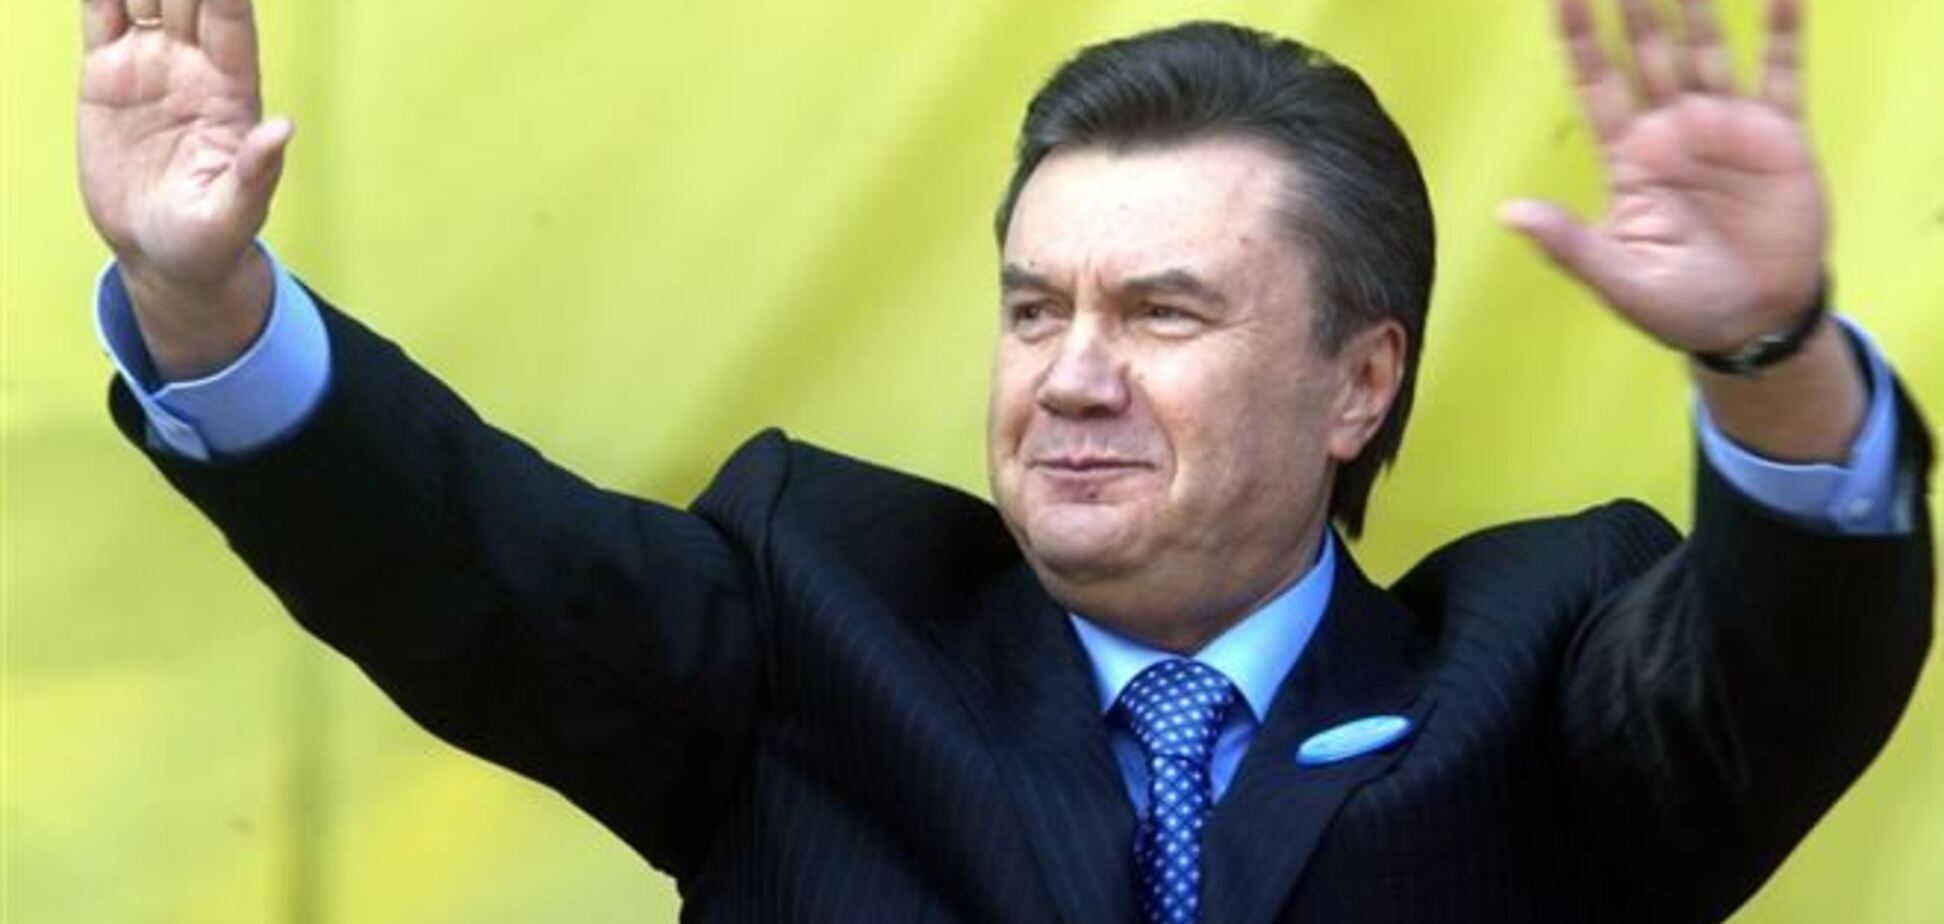 Аксенов написал в Twitter, что Янукович уже в Донецке